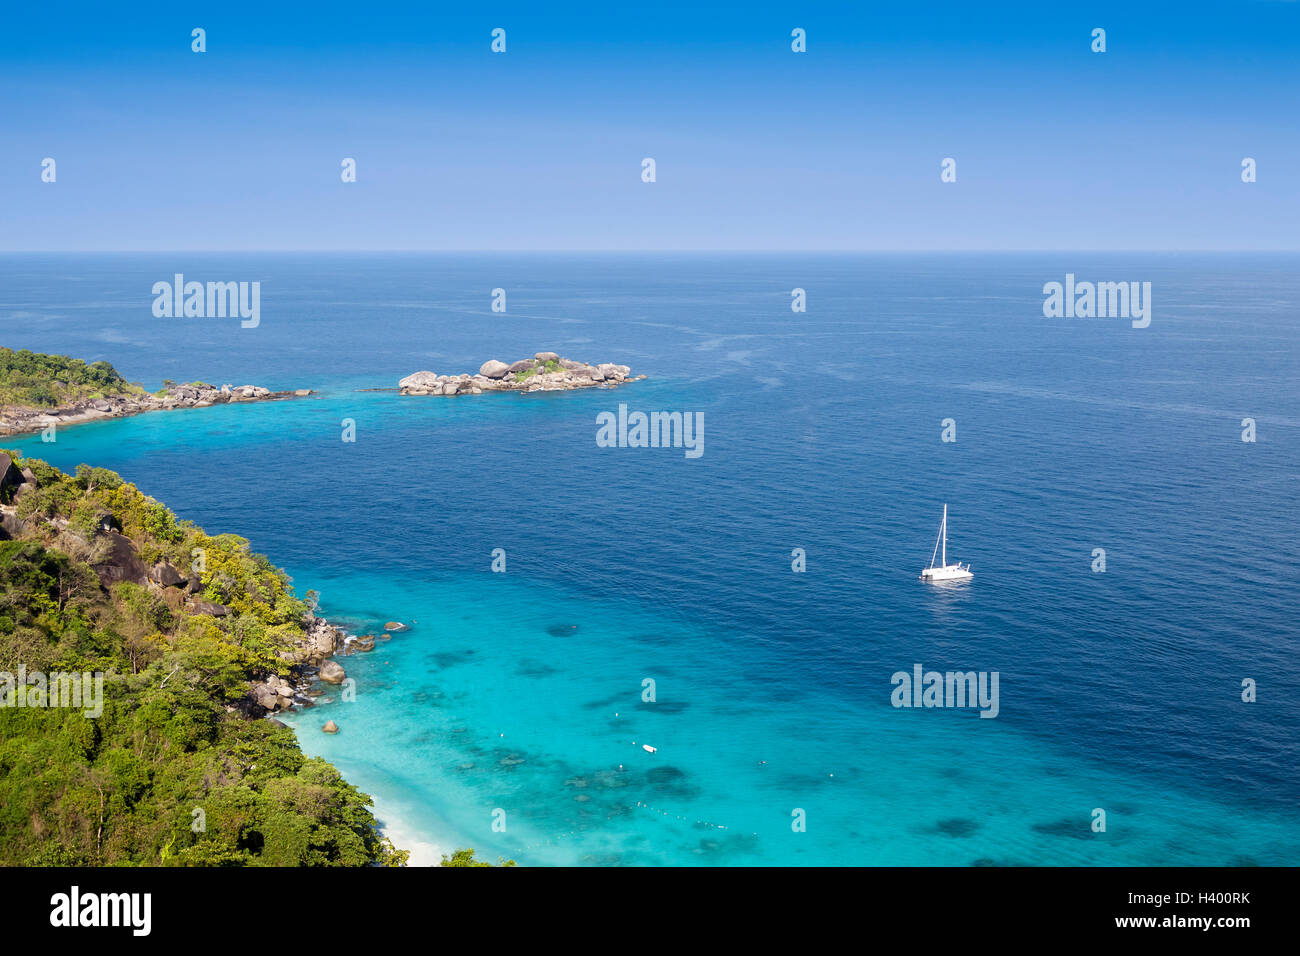 Isla tropical rodeado de transparentes aguas turquesas y arrecifes de coral Foto de stock